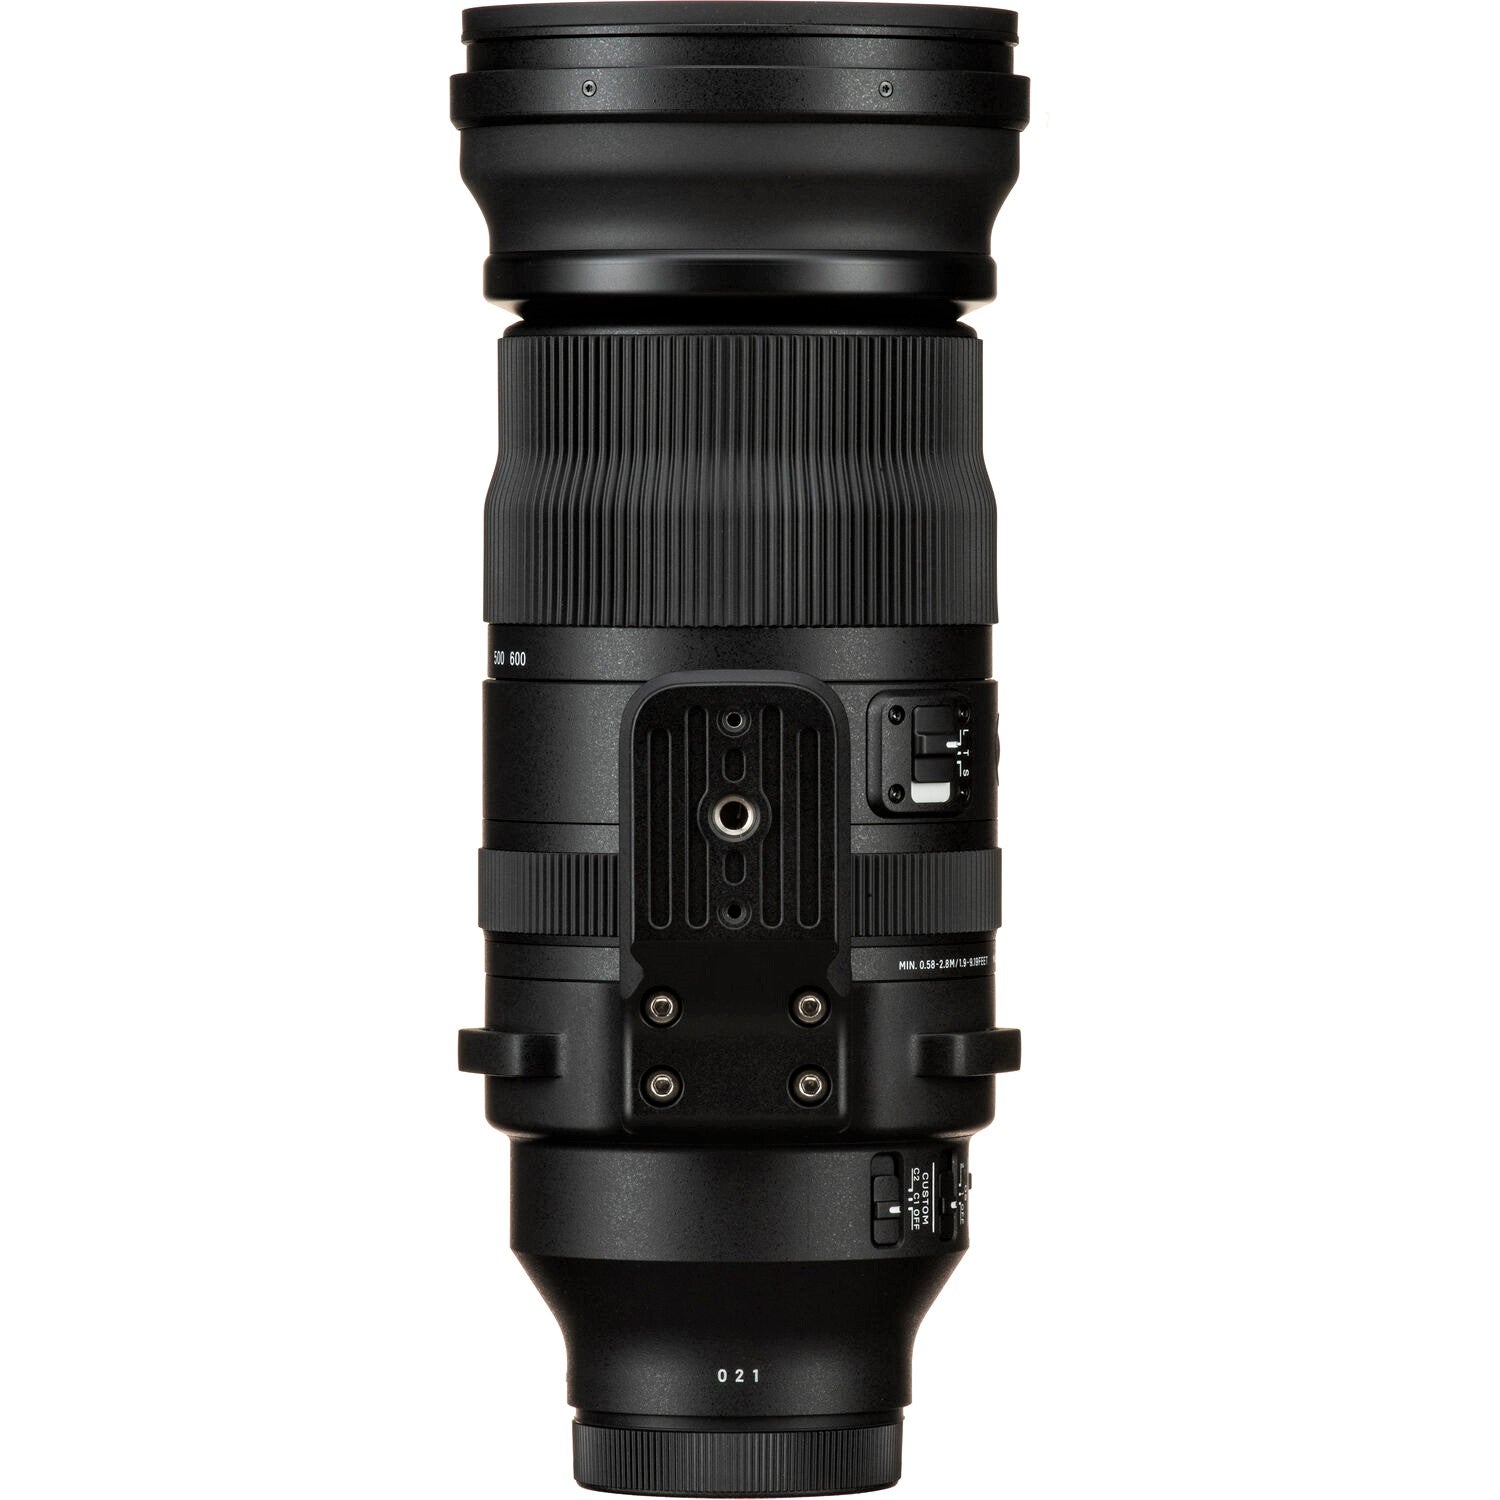 Sigma 150-600mm F5-6.3 DG DN OS Sports Lens (Leica L Mount)